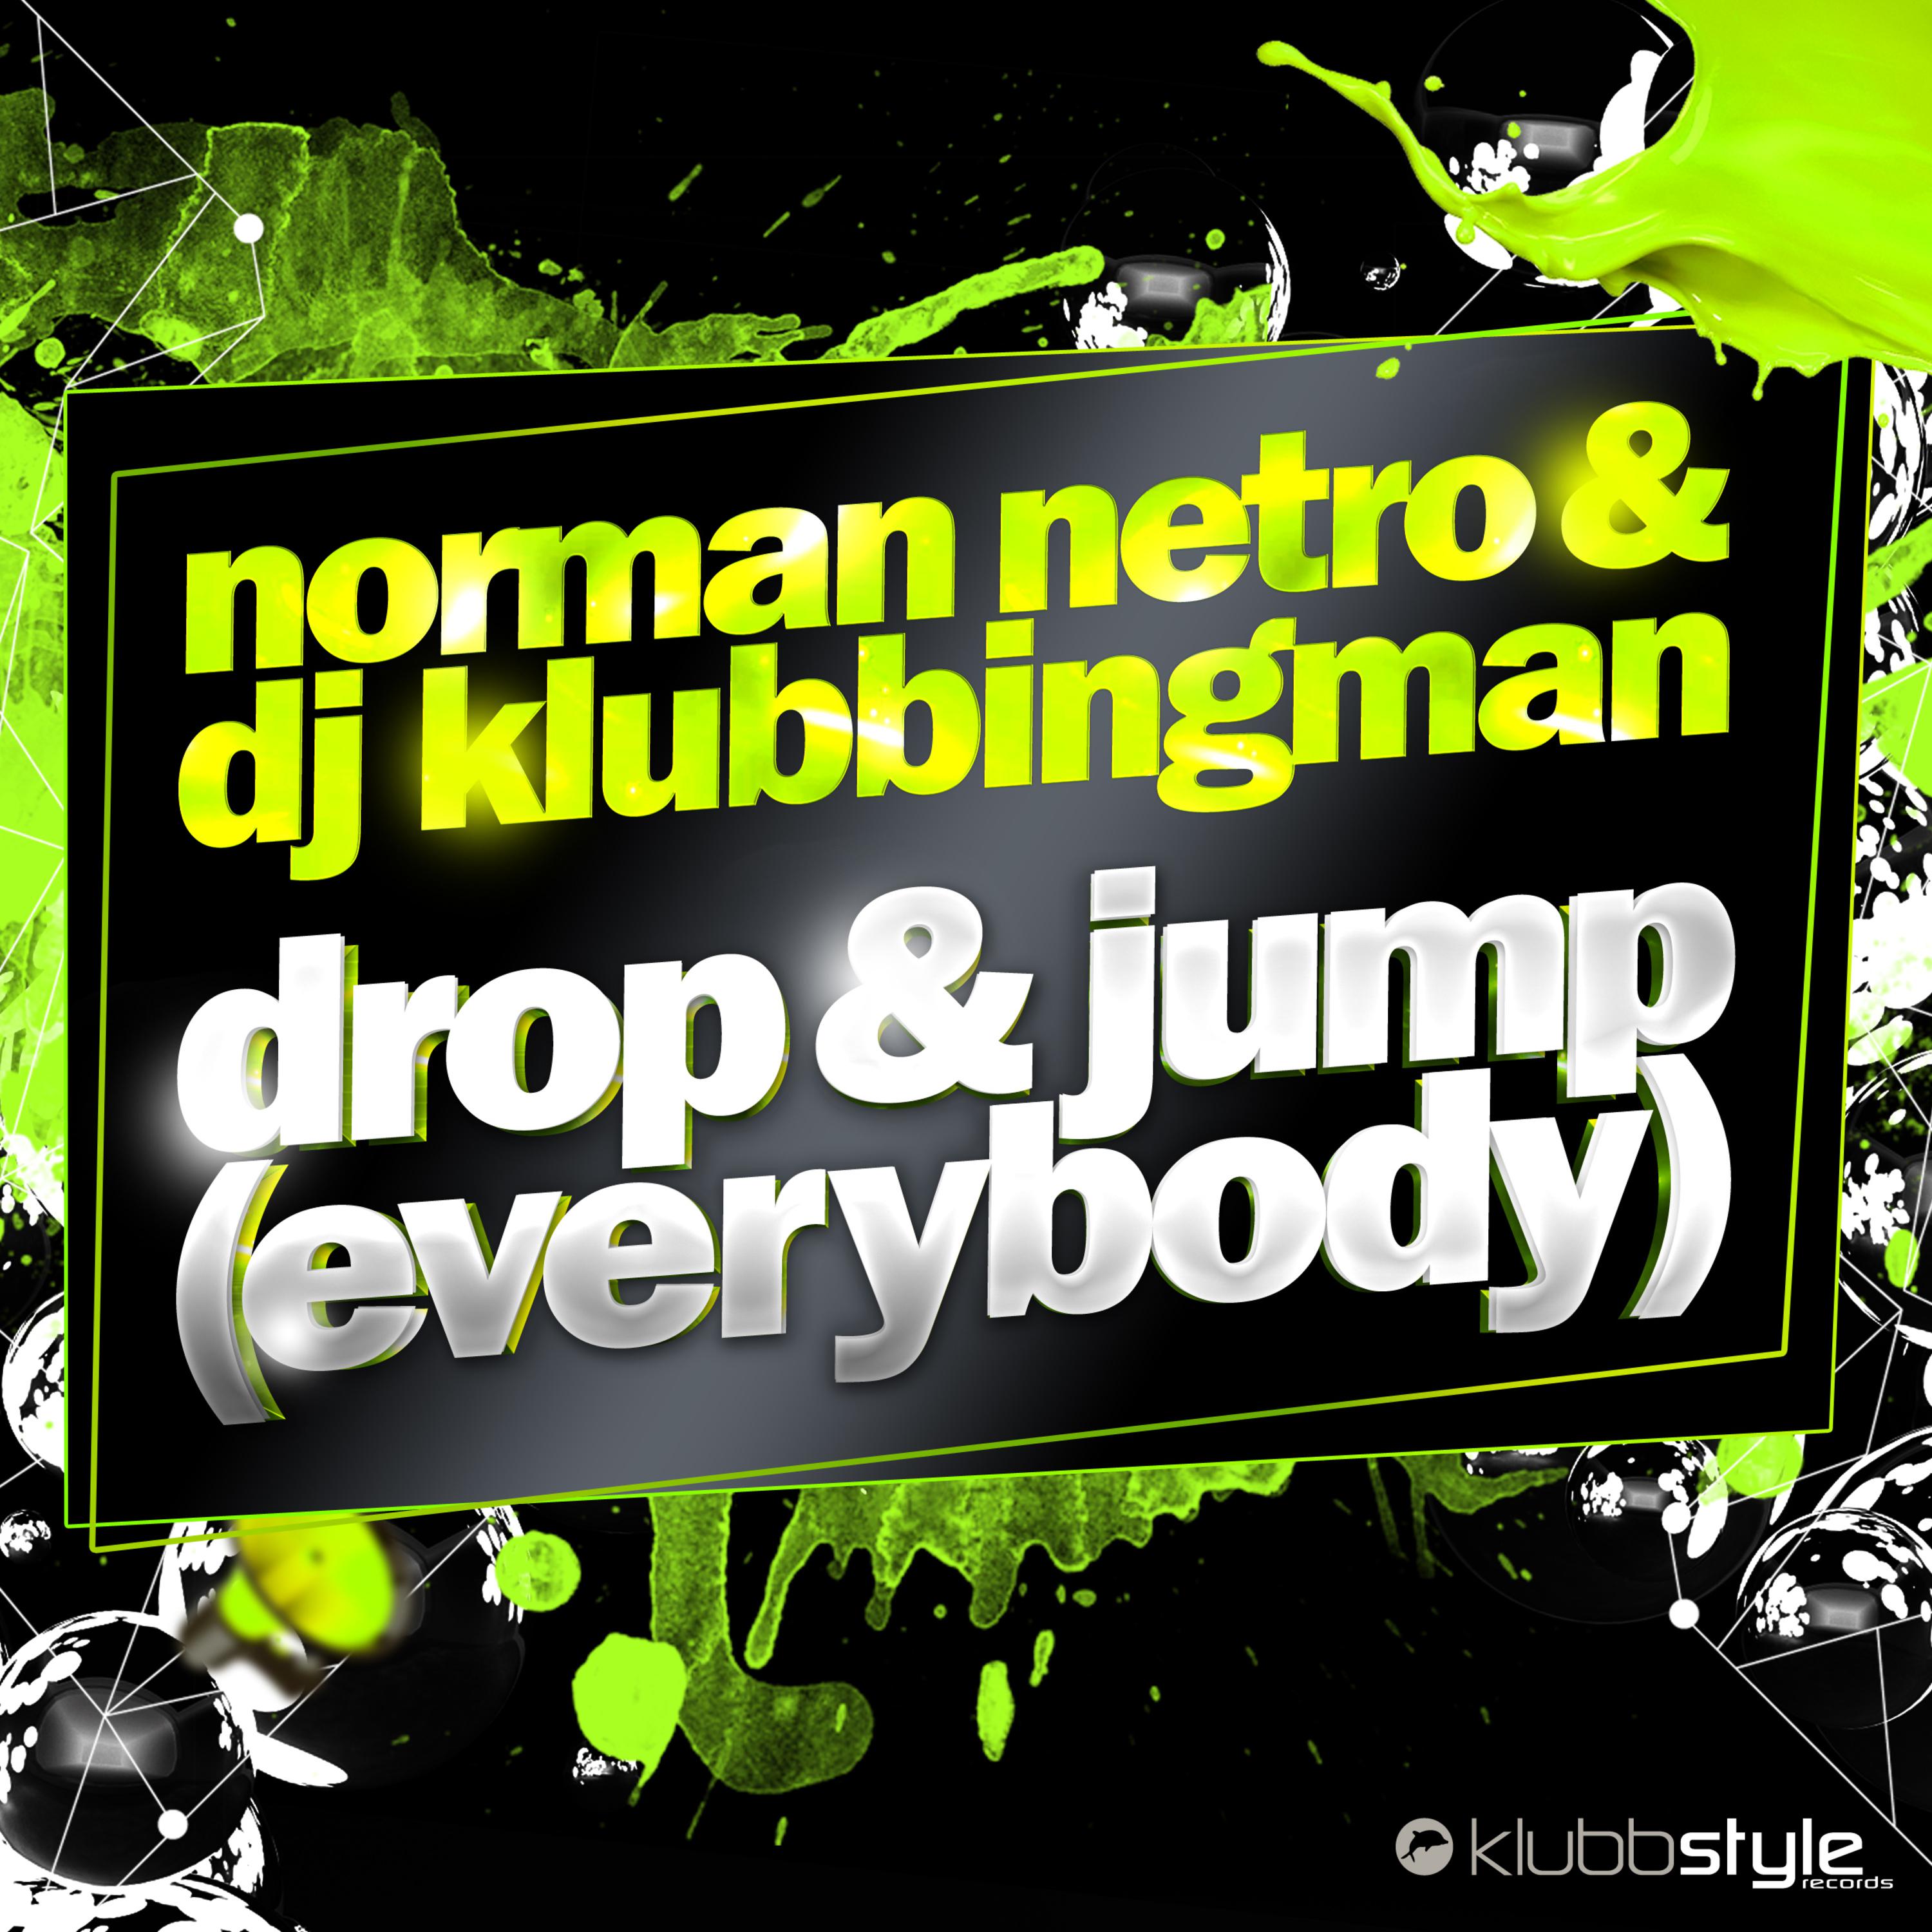 Drop & Jump (Everybody) (Club Mix Instrumental)